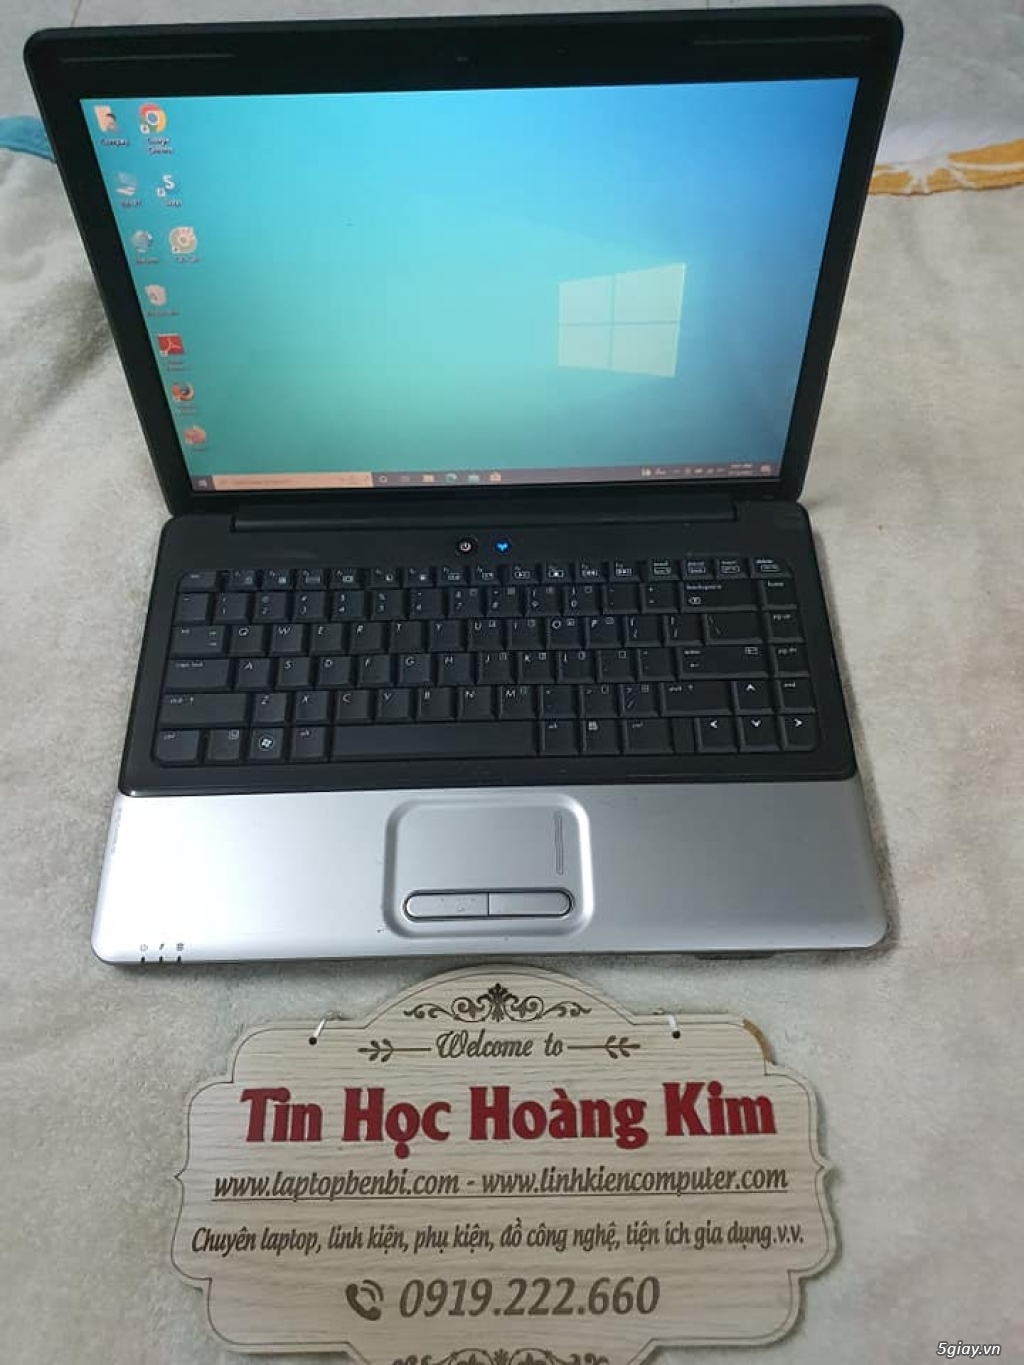 Laptop HP Compaq CQ40 - Core 2 Duo T6500, 3G, 100G, 14inch, giá rẻ - 3